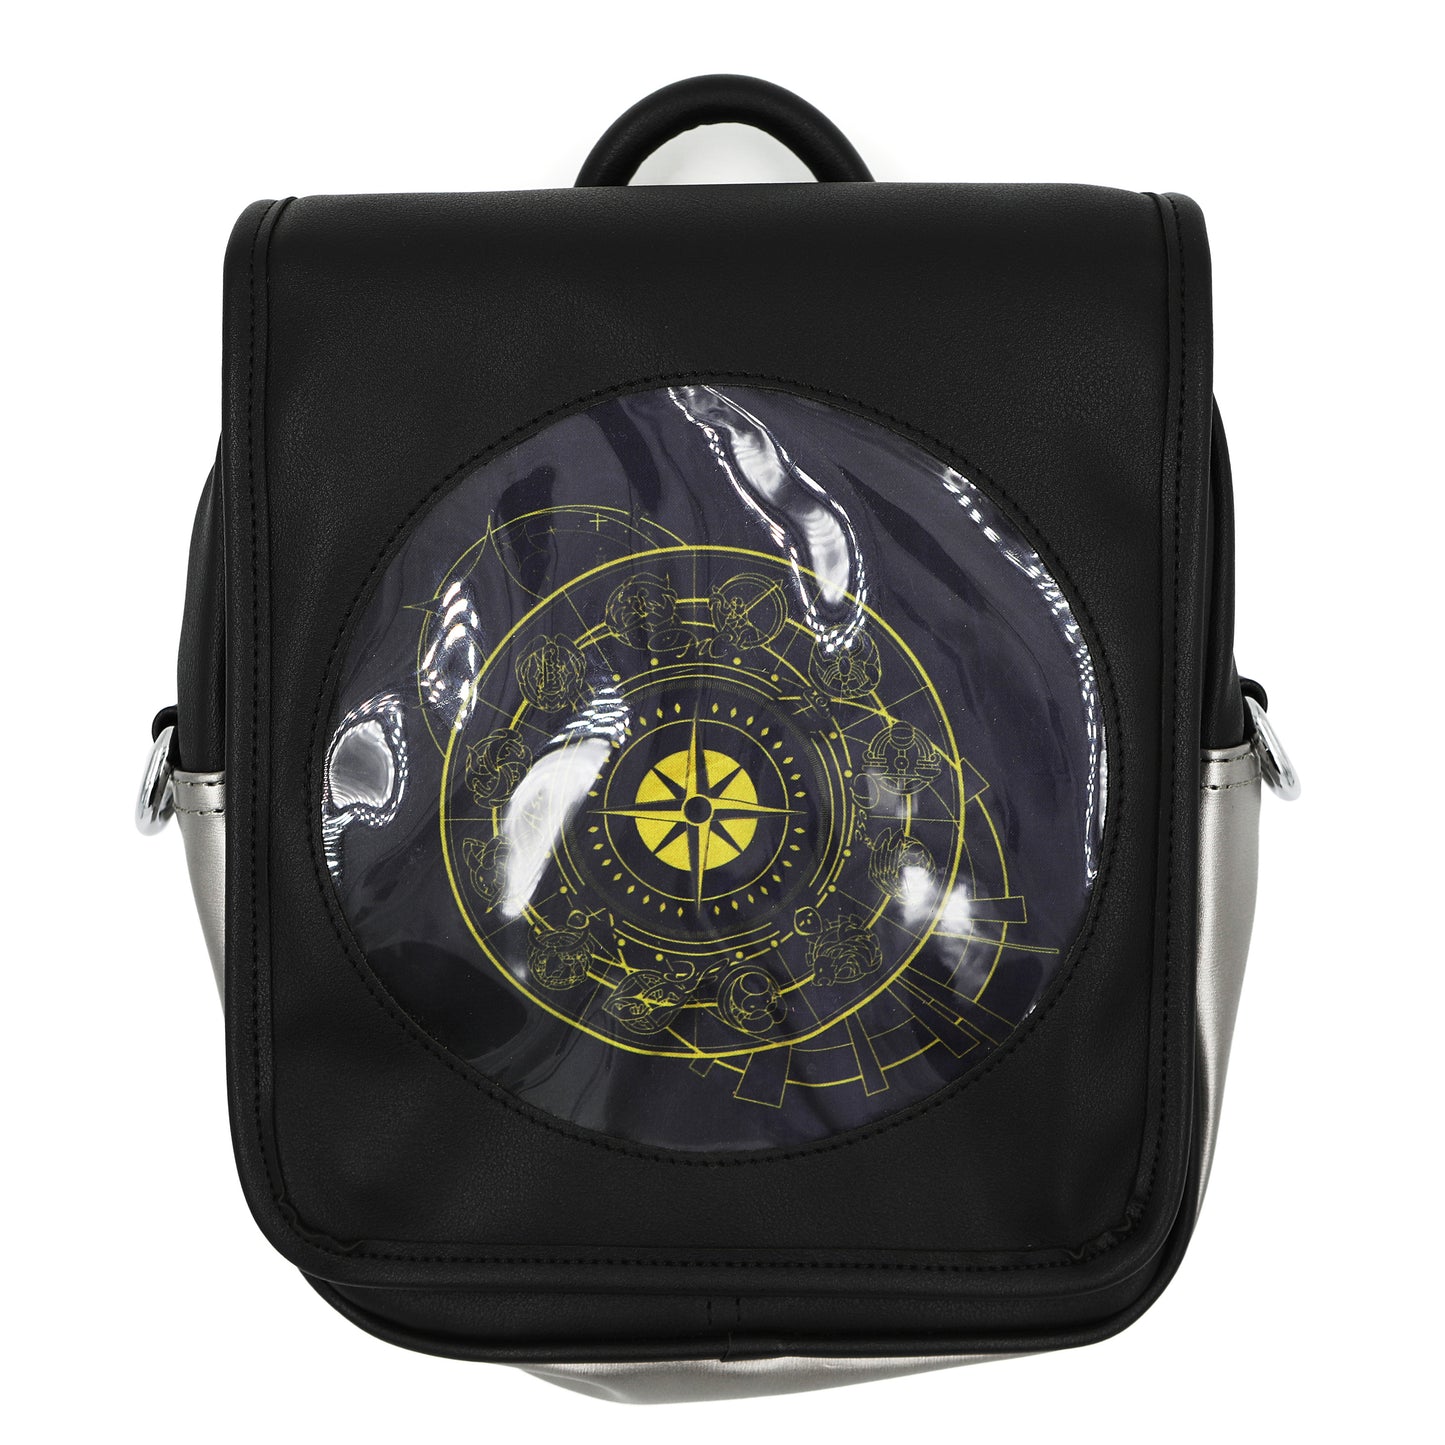 The zodiac insert within the black ita bag.